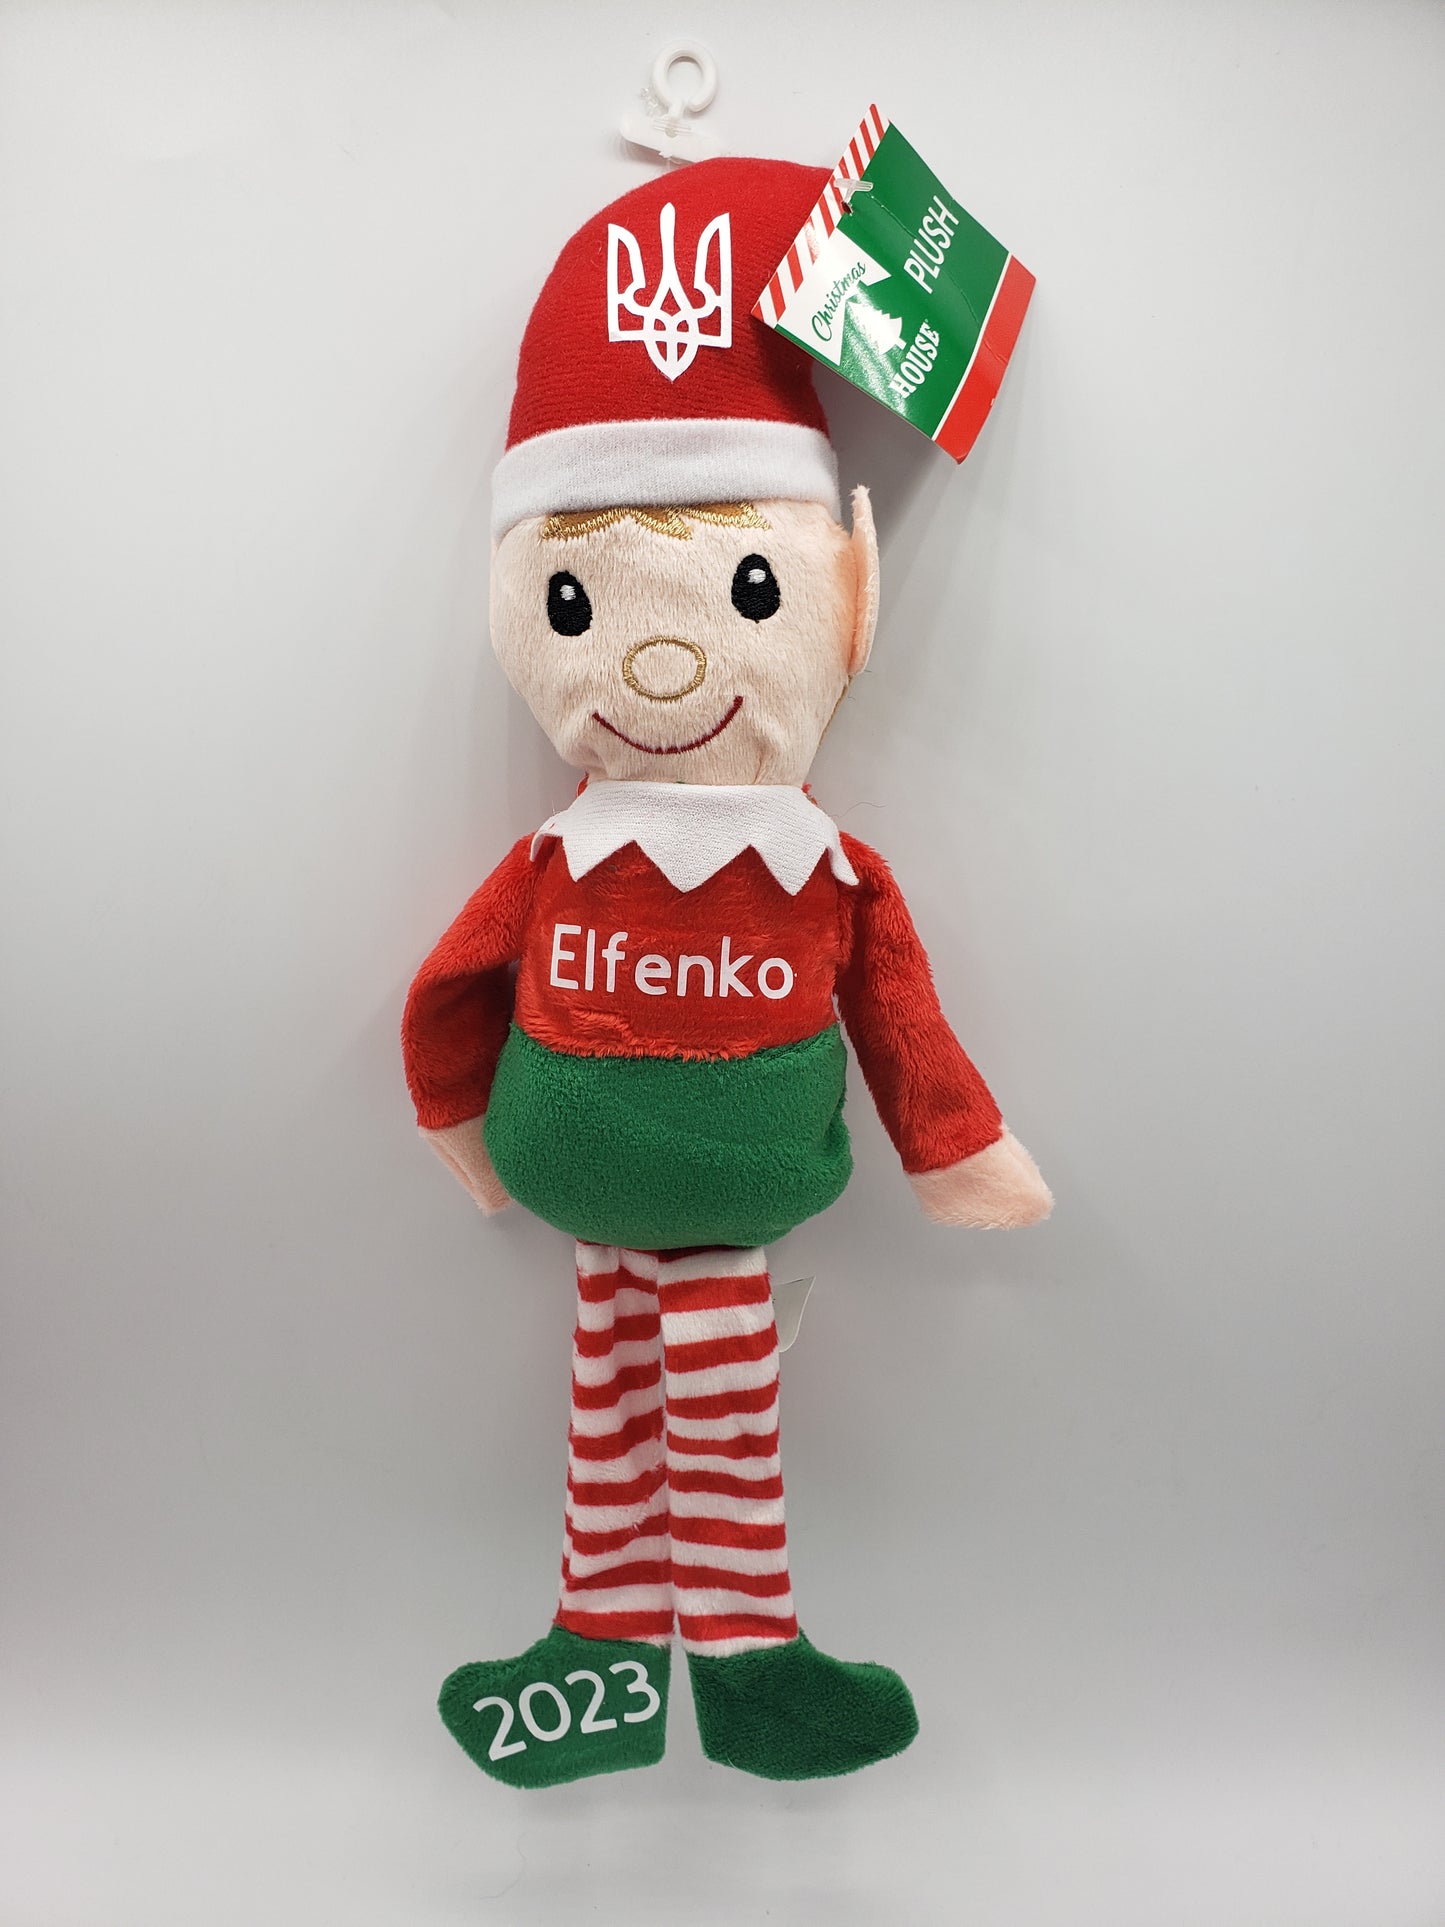 Elfenko The Ukrainian Elf